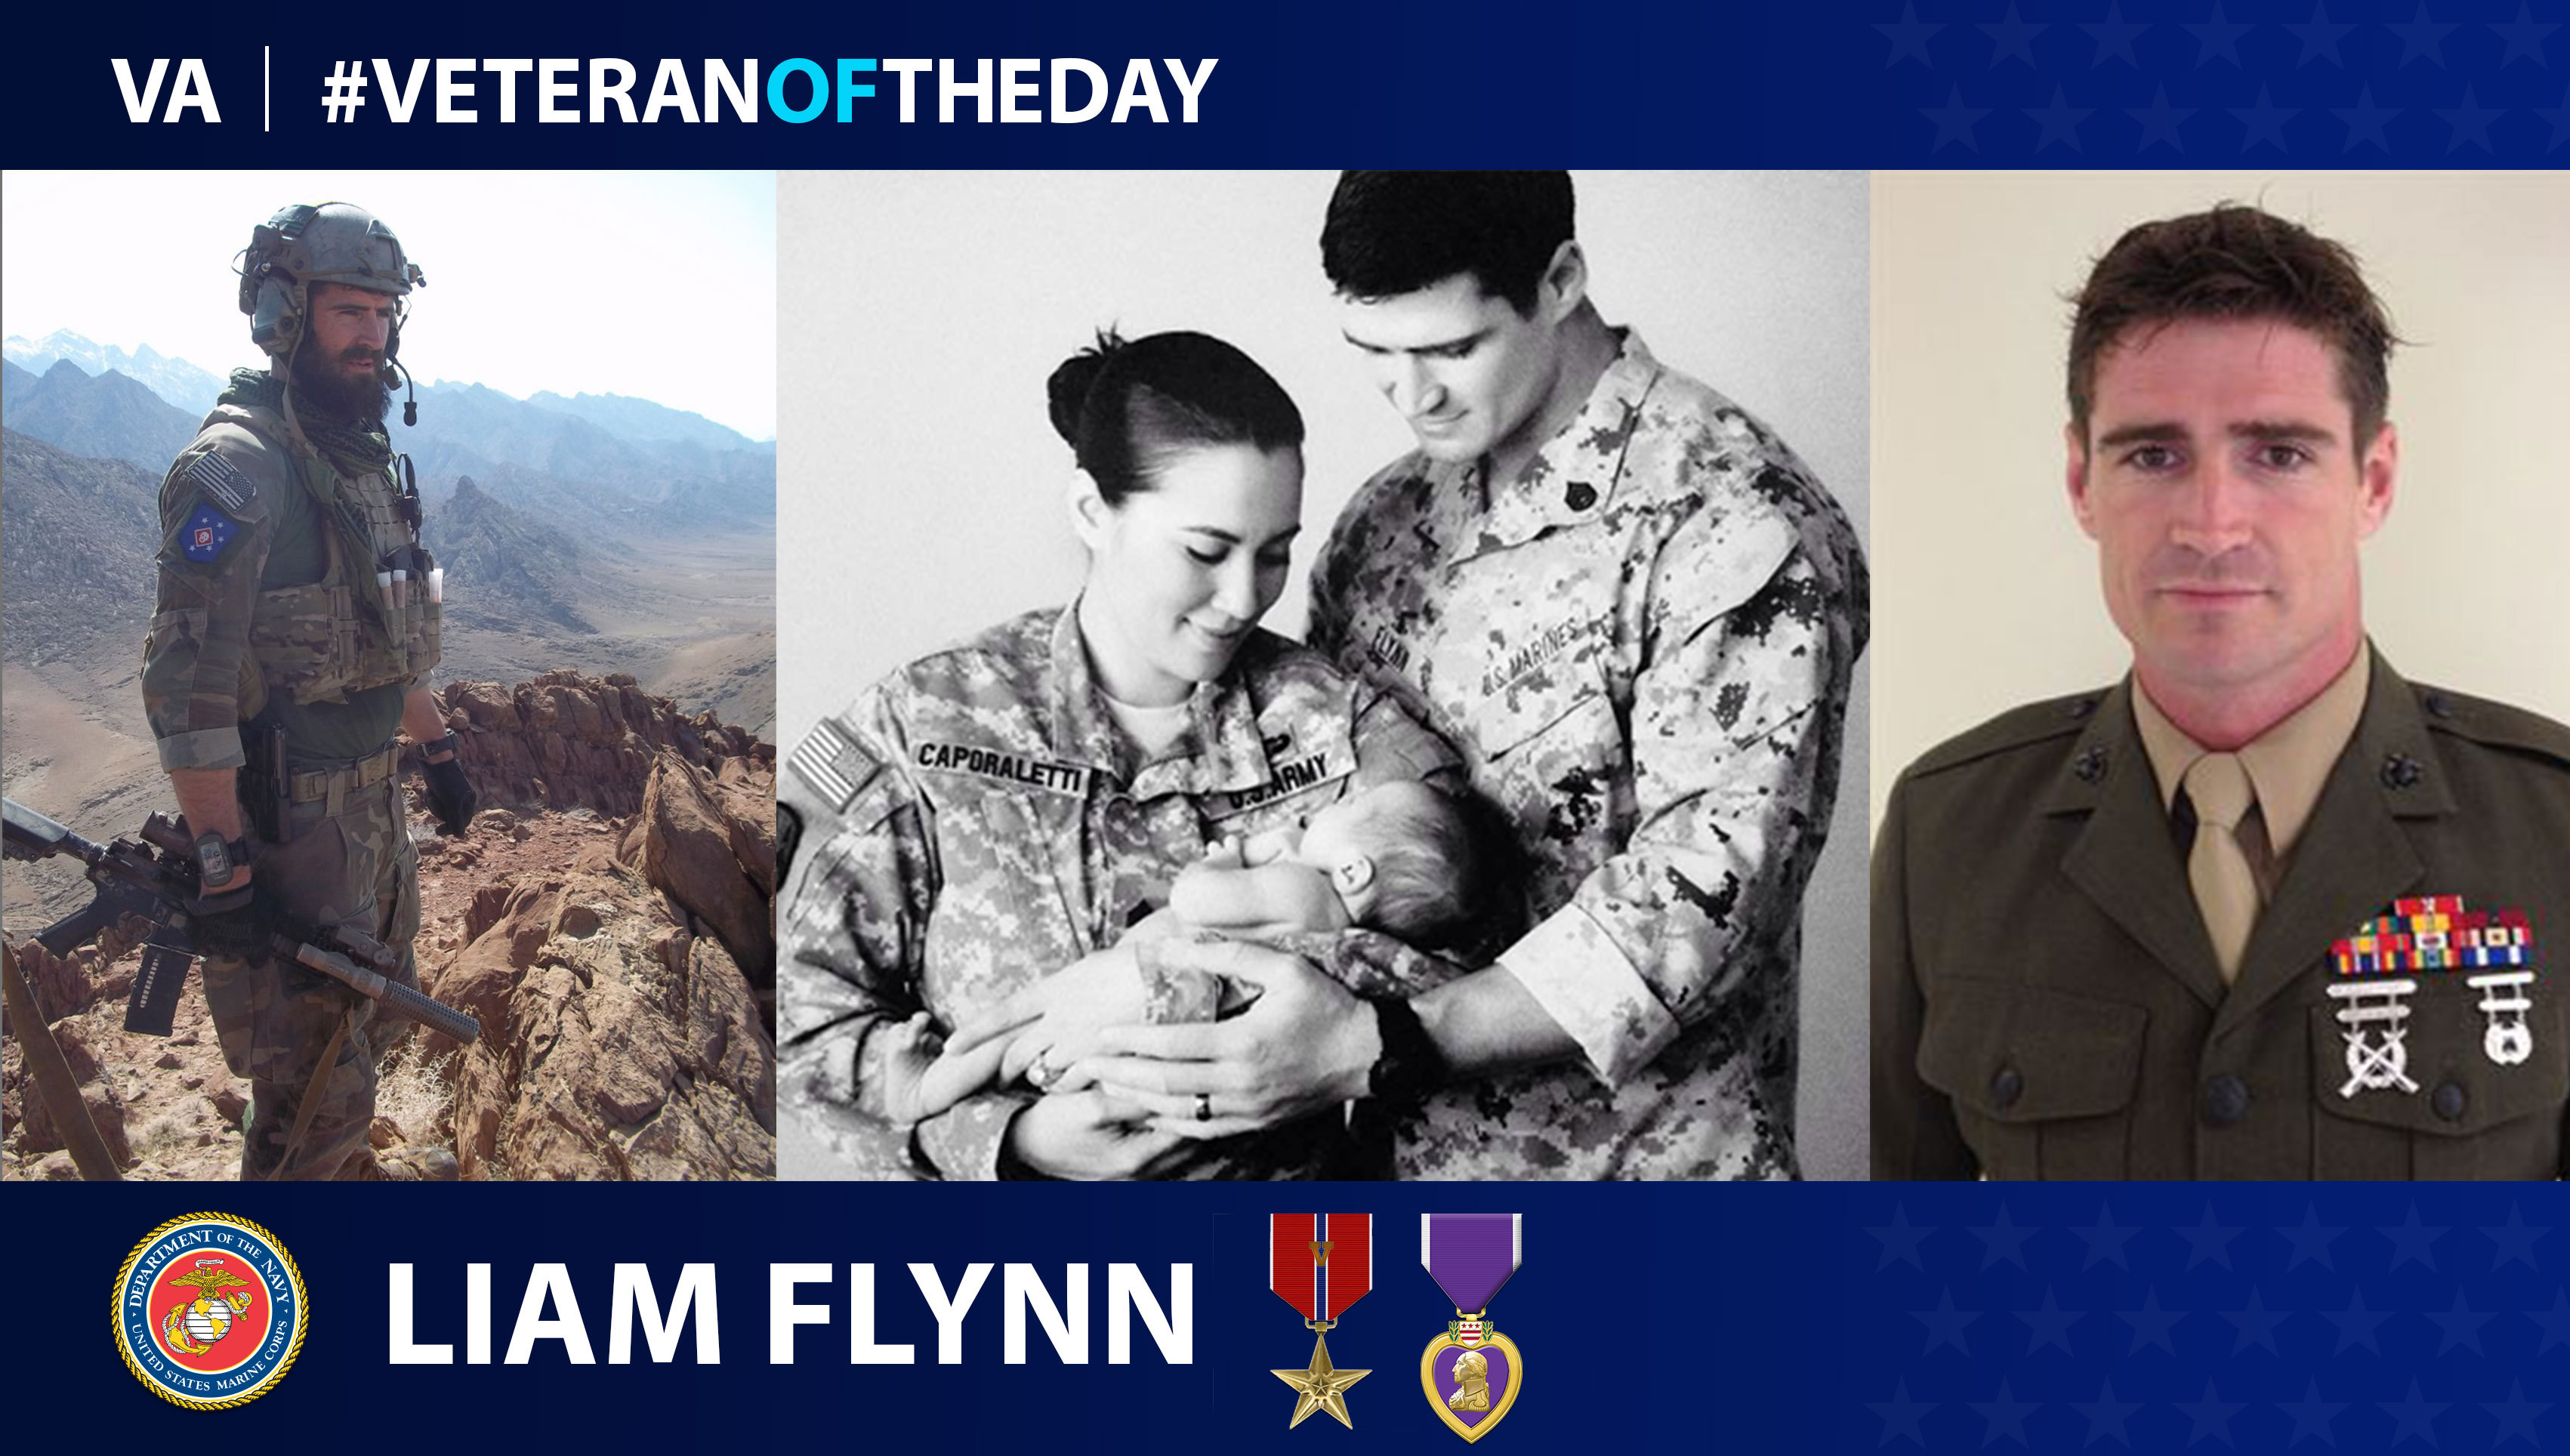 Marine Veteran Liam Flynn is today's Veteran of the Day.